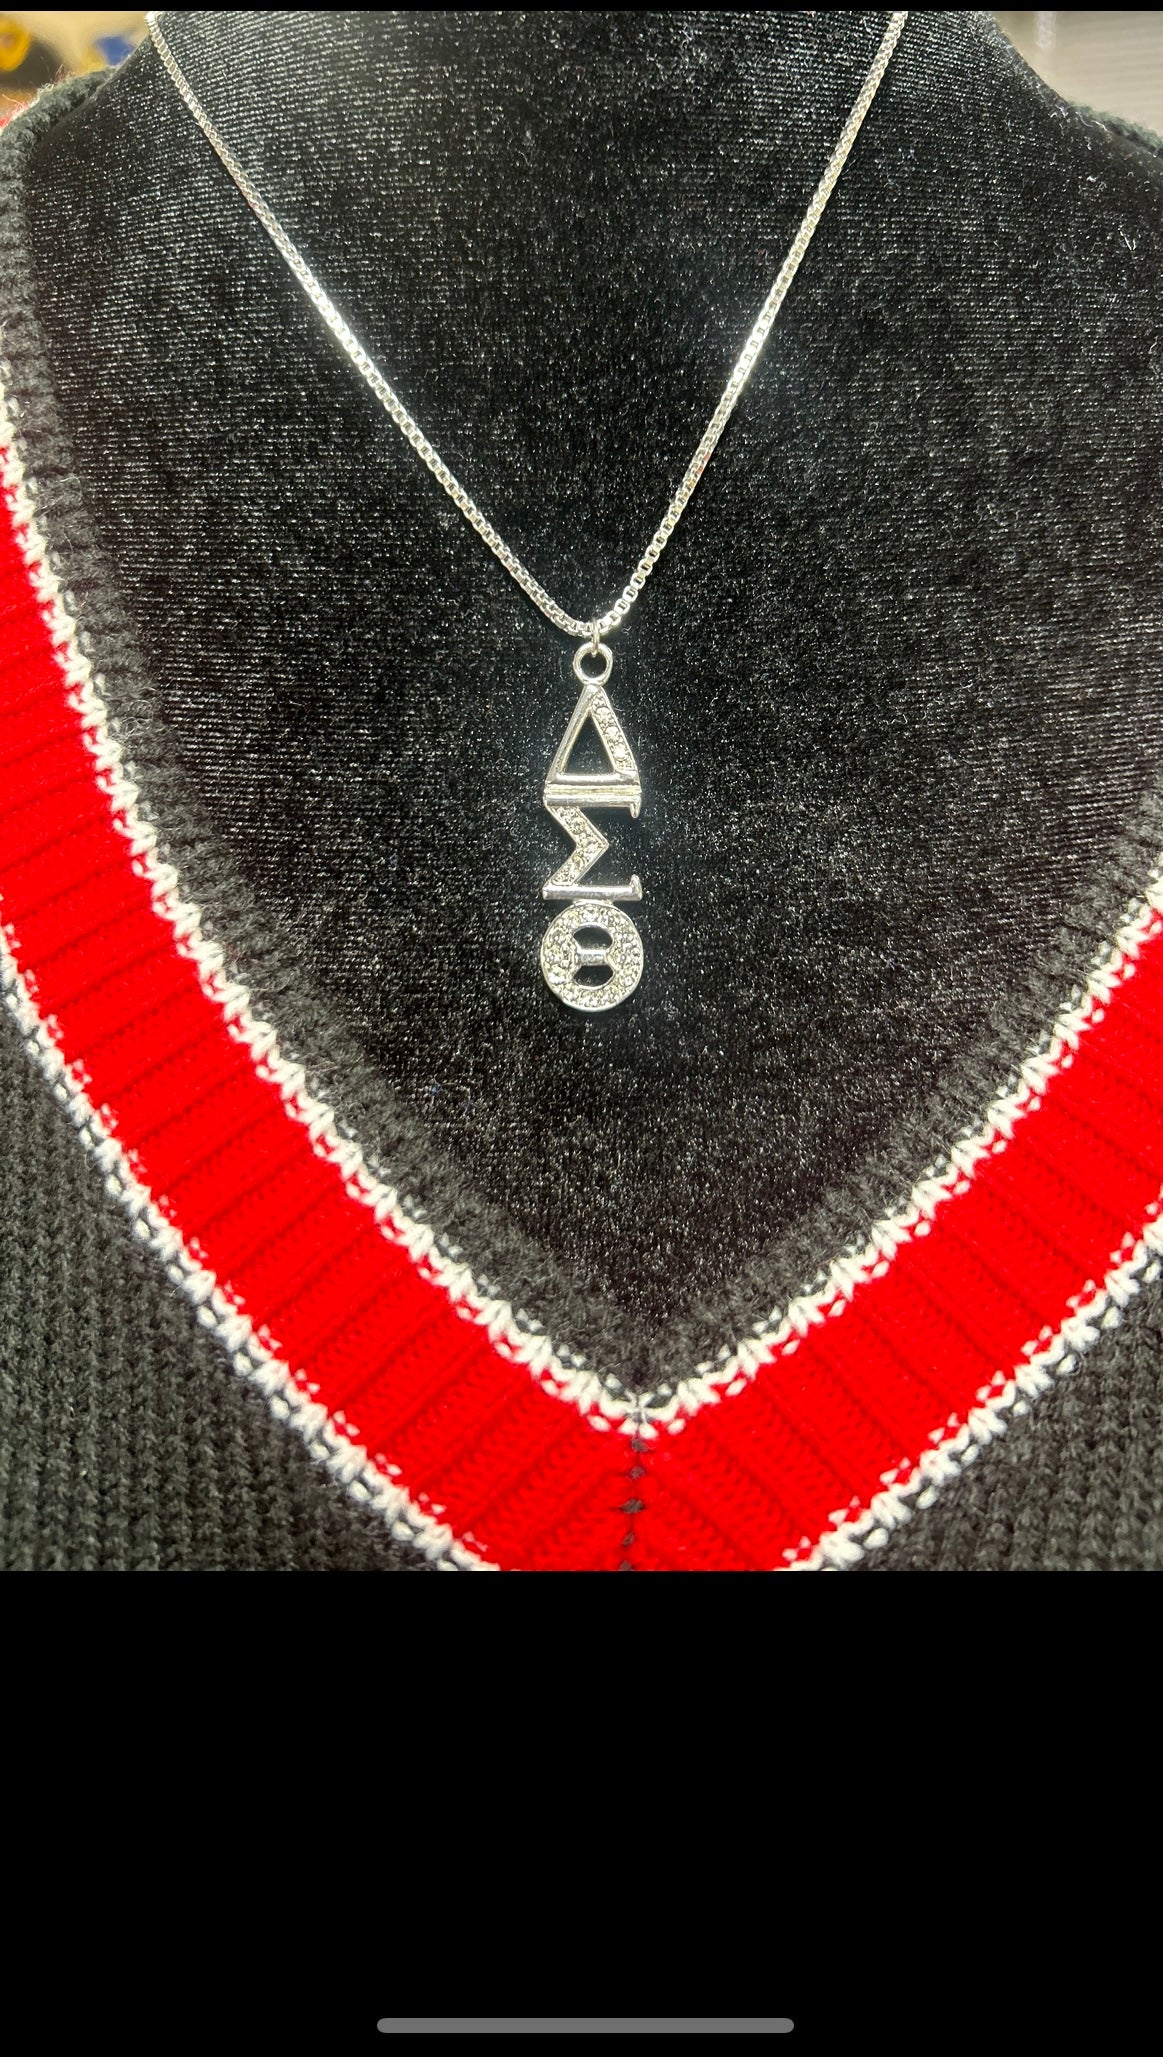 Delta Sigma Theta- “Bling” Necklace